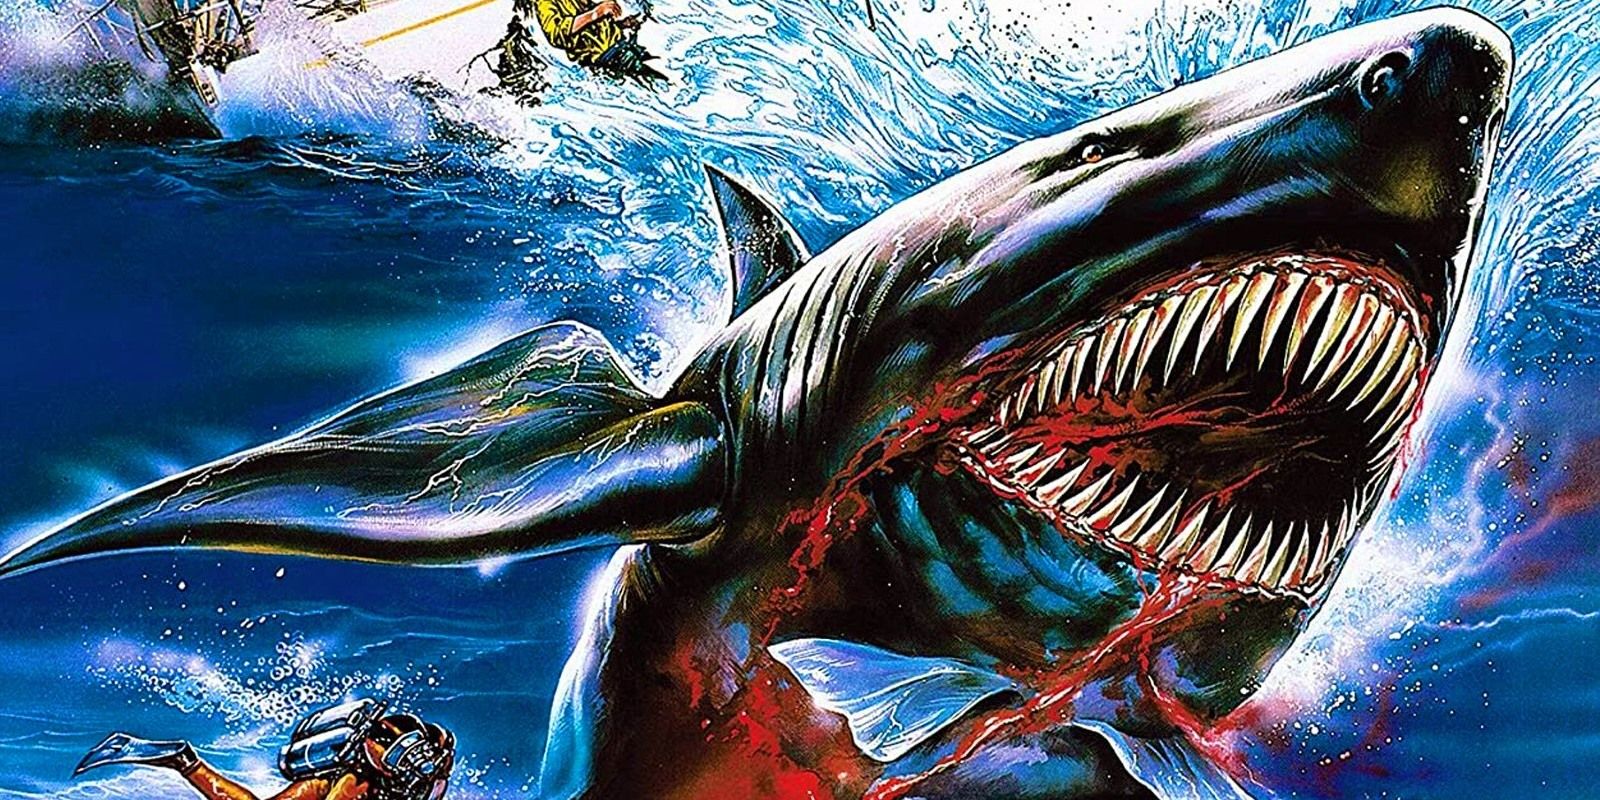 Jaws: The Revenge’s Italian Ripoff Deep Blood explicado (¿es mejor?)